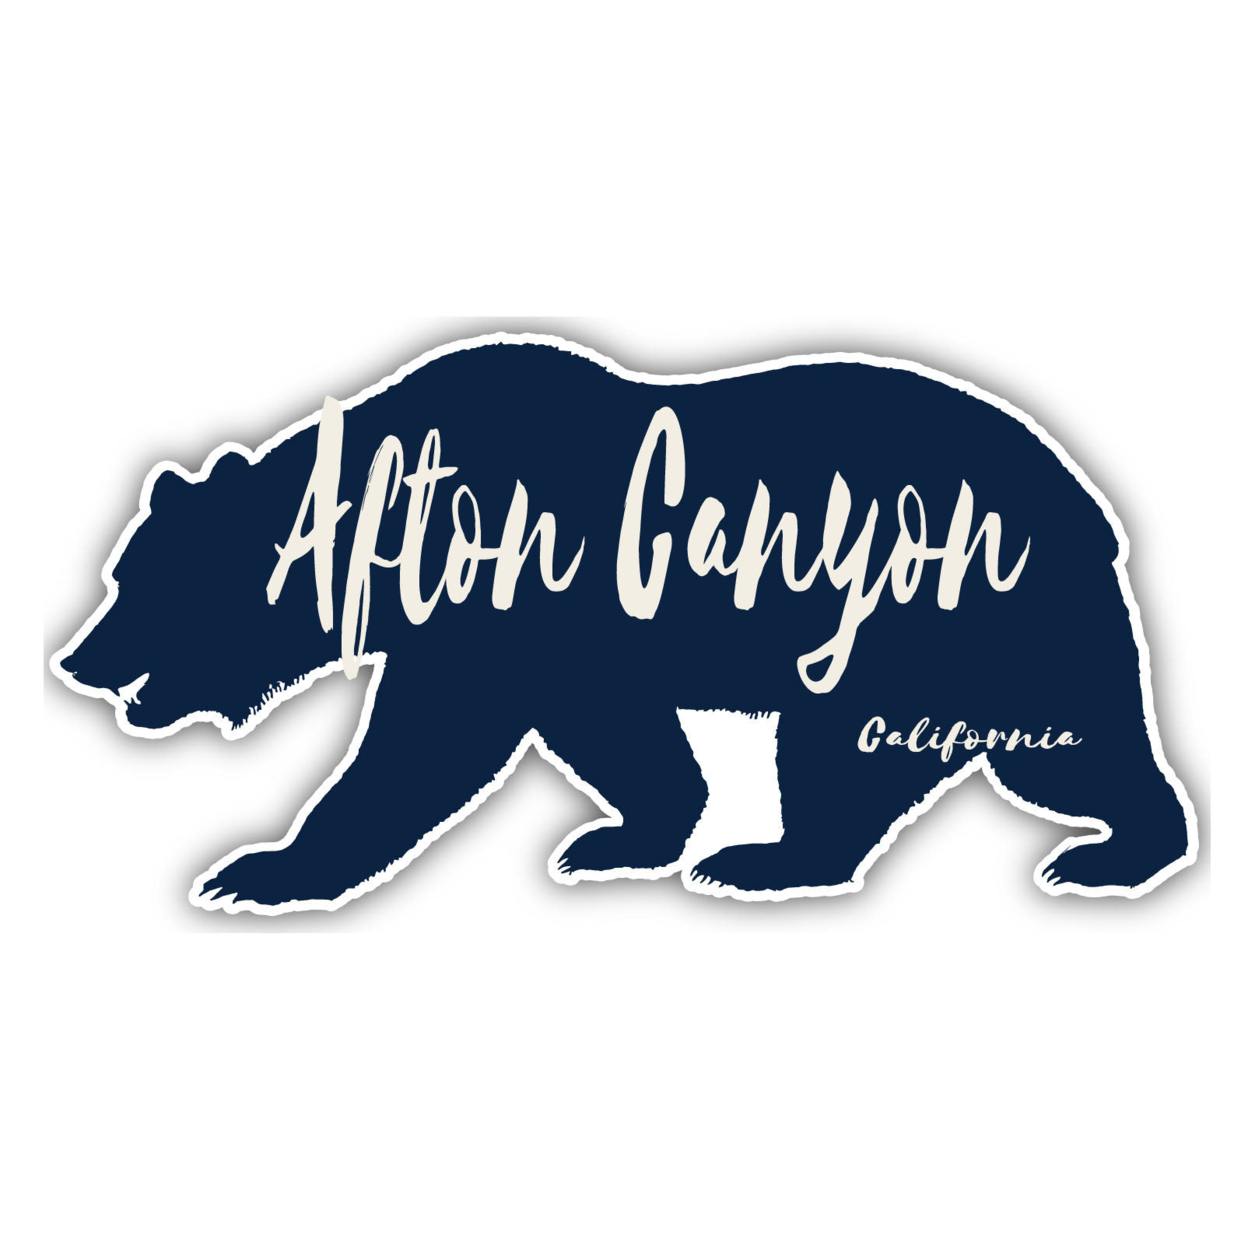 Afton Canyon California Souvenir Decorative Stickers (Choose Theme And Size) - Single Unit, 2-Inch, Bear